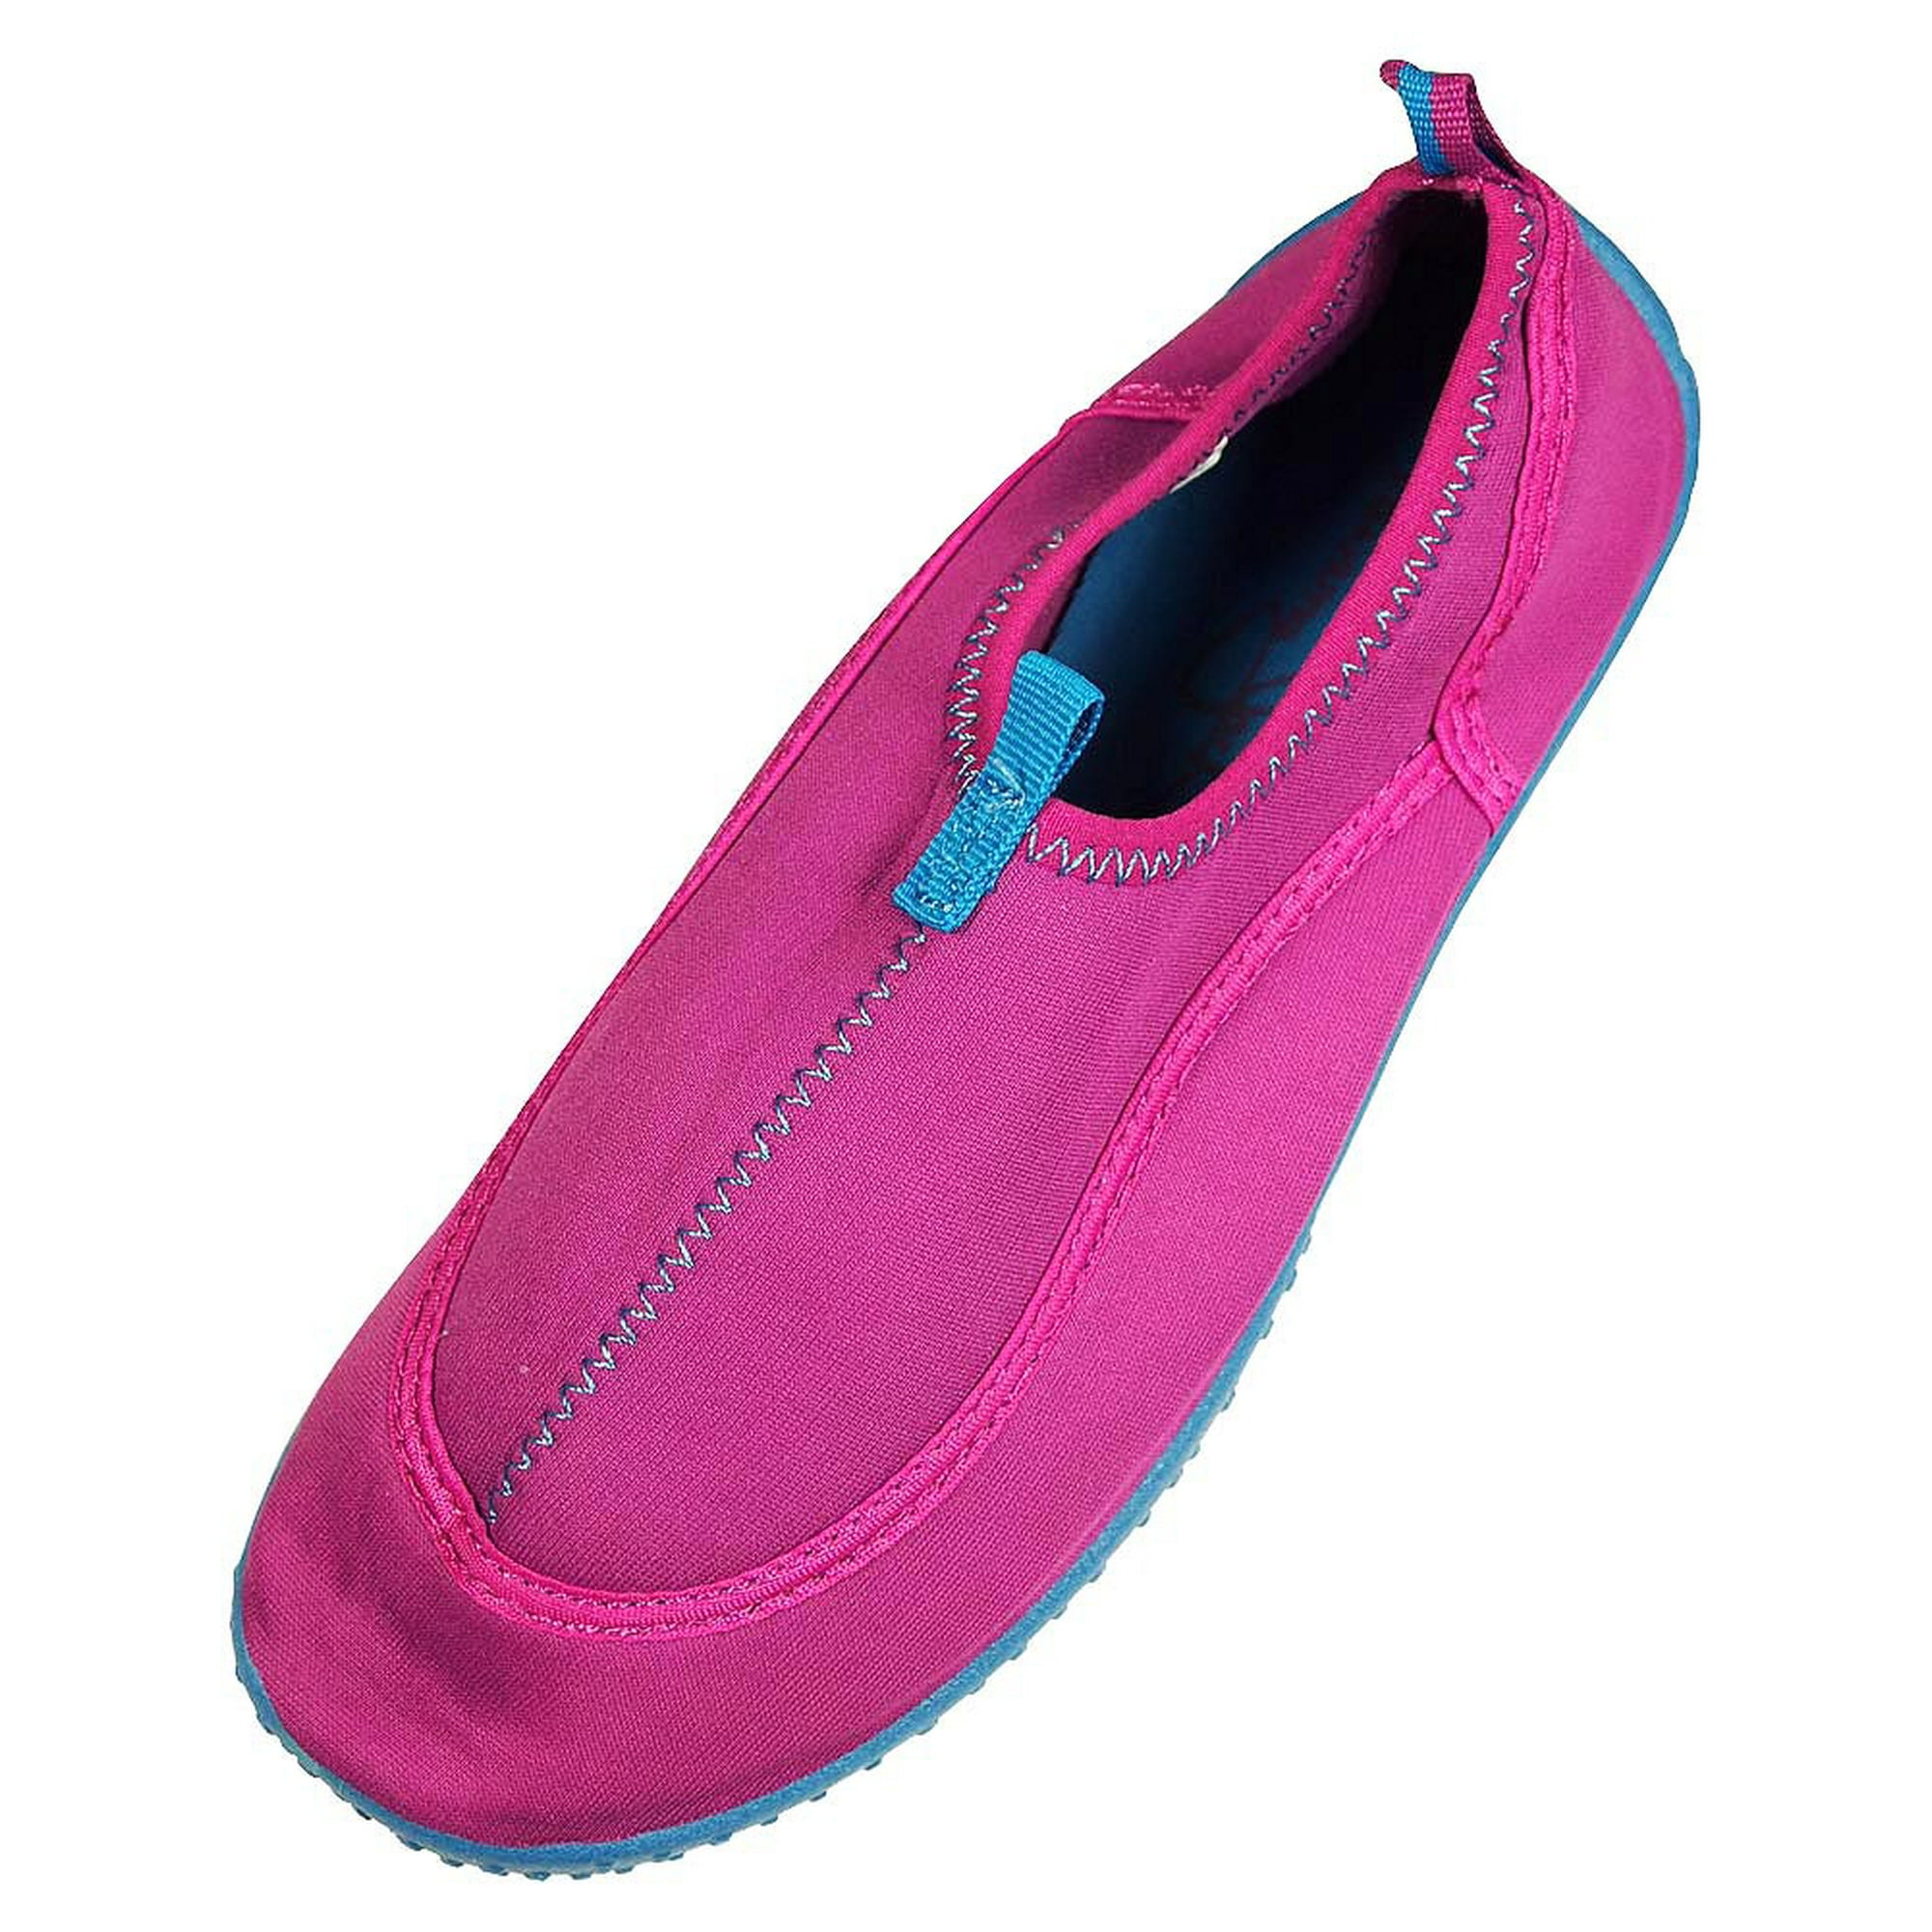 Panama Jack Womens Aqua Water Shoe Slip-On Beach Pool Swim Shoes (Purple, 7) - image 1 of 2